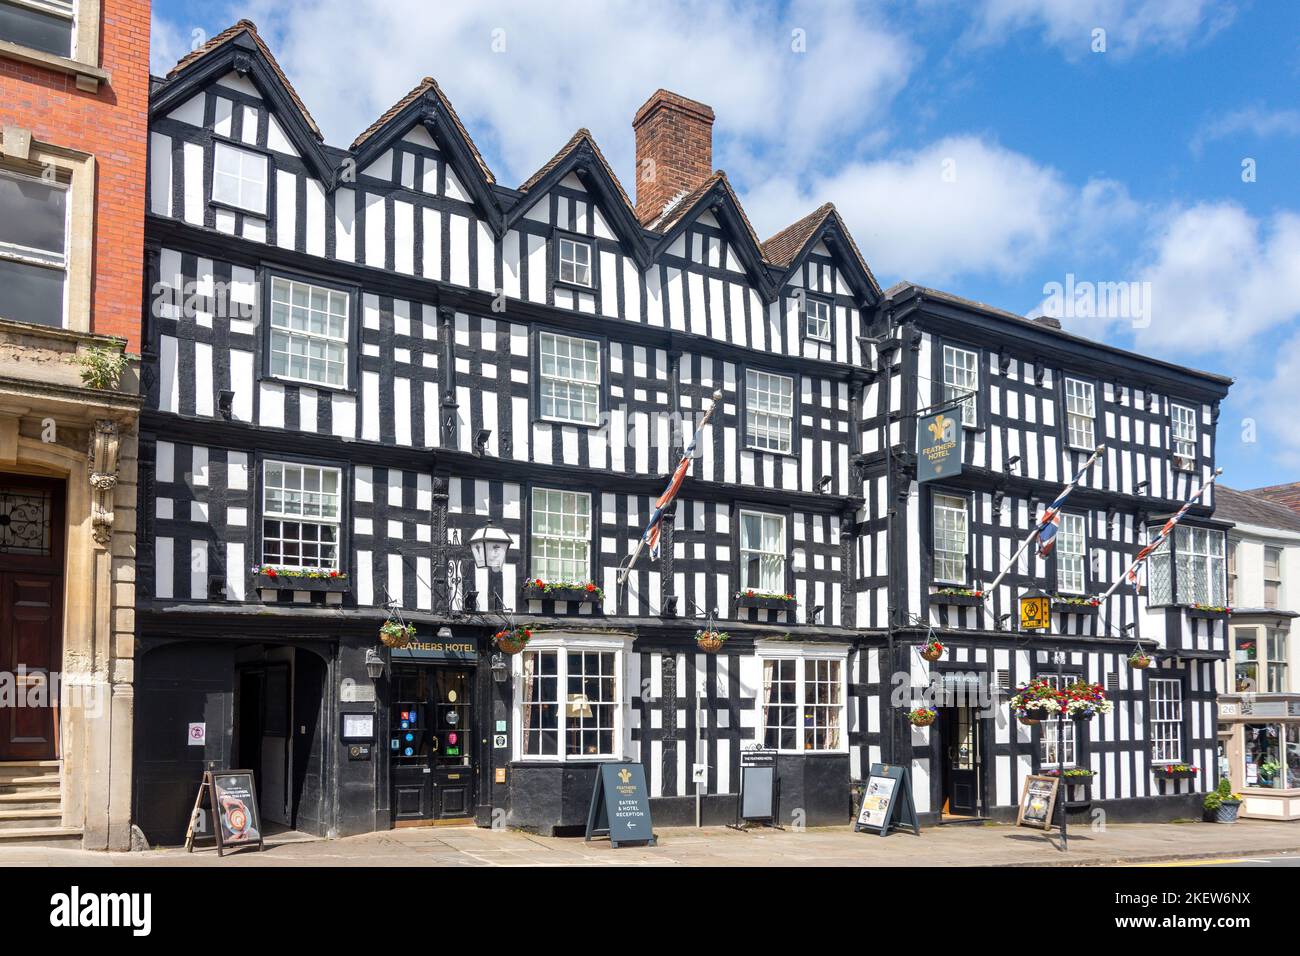 16e siècle les plumes Hotel, High Street, Ledbury, Herefordshire, Angleterre, Royaume-Uni Banque D'Images